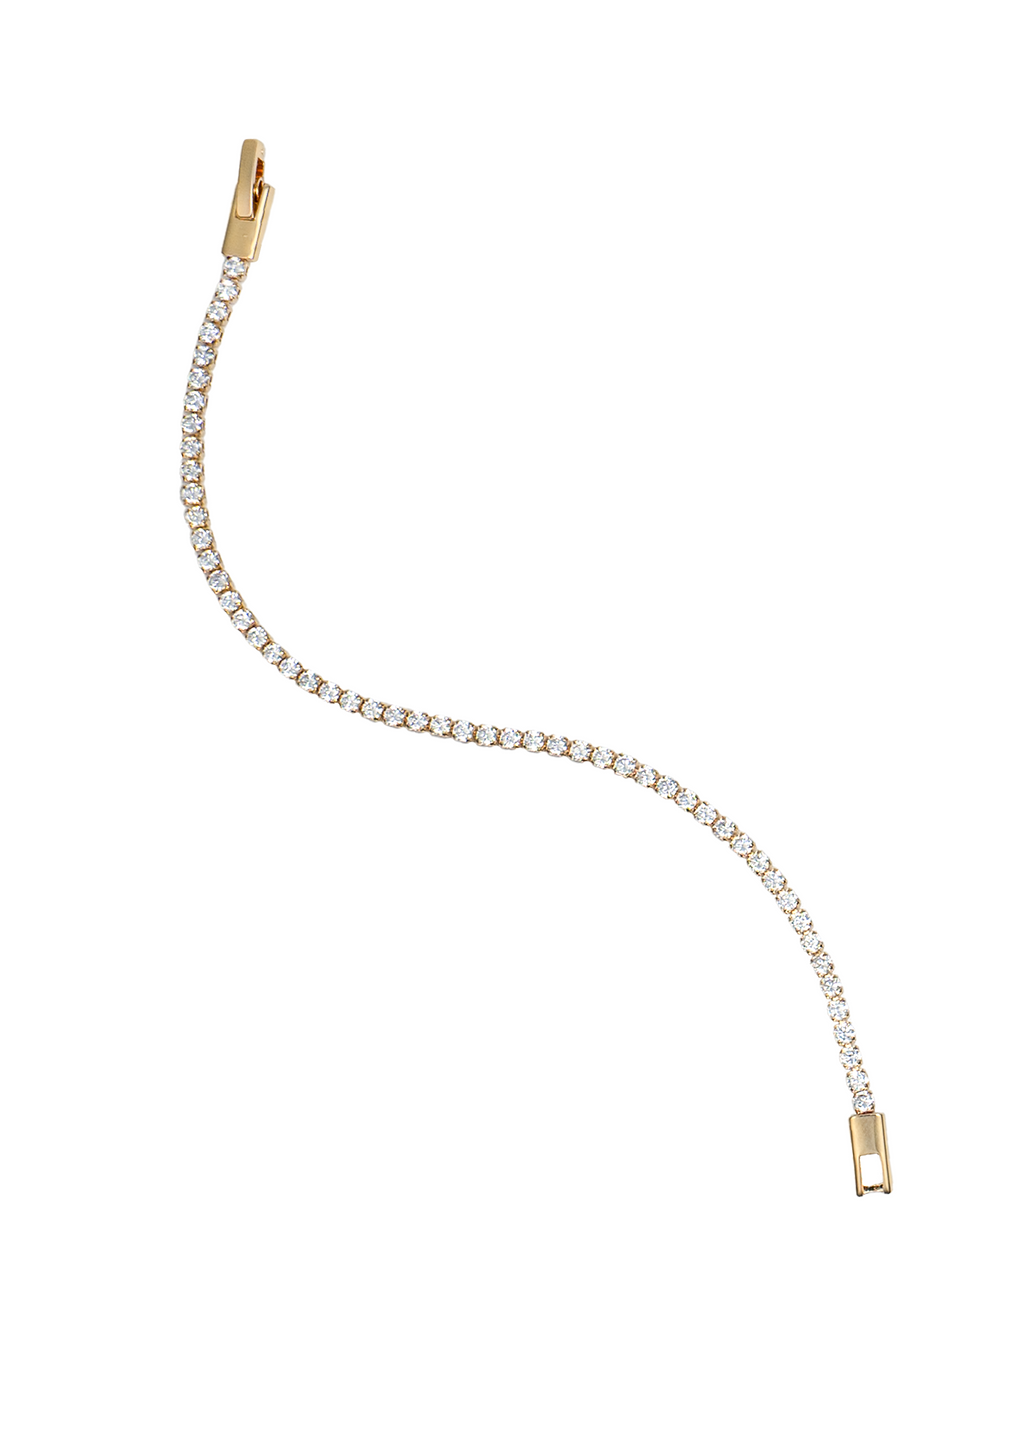 Diamond Tennis Bracelet / Necklace with Cubic Zirconia Stones (H94)(I324A)